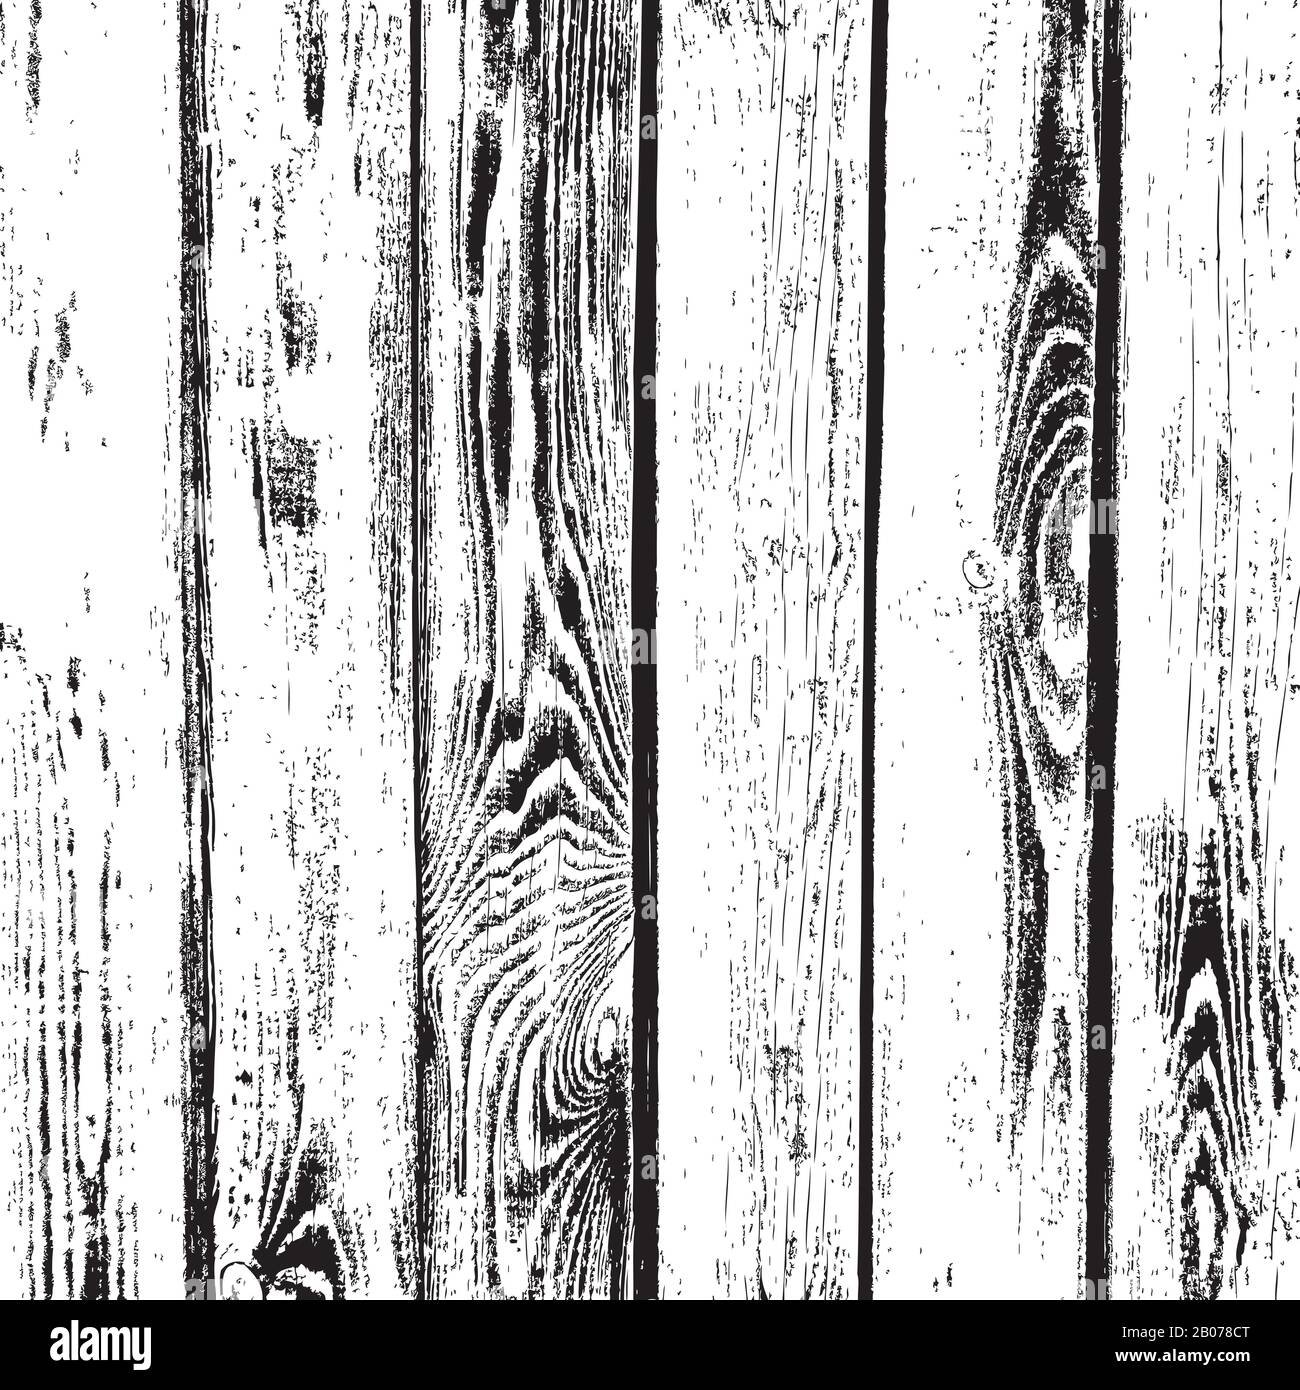 Wooden planks vector texture. Old wood grain textured background. Grunge board vintage, floor or table illustration Stock Vector